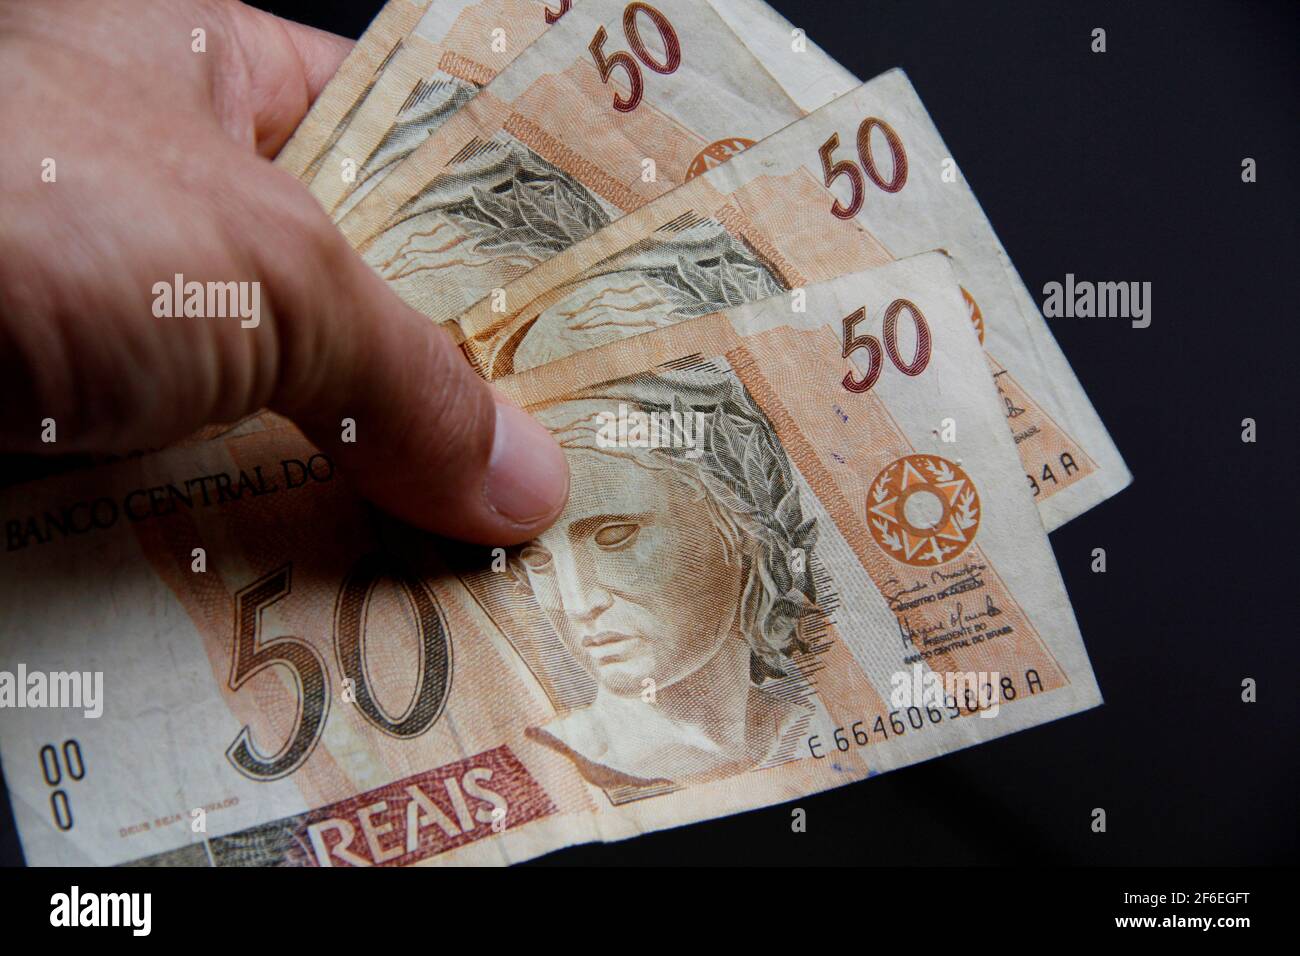 salvador, bahia / brasile - 19 gennaio 2013: Tenere a mano brasiliano banconote in valuta reale. *** Local Caption *** Foto Stock